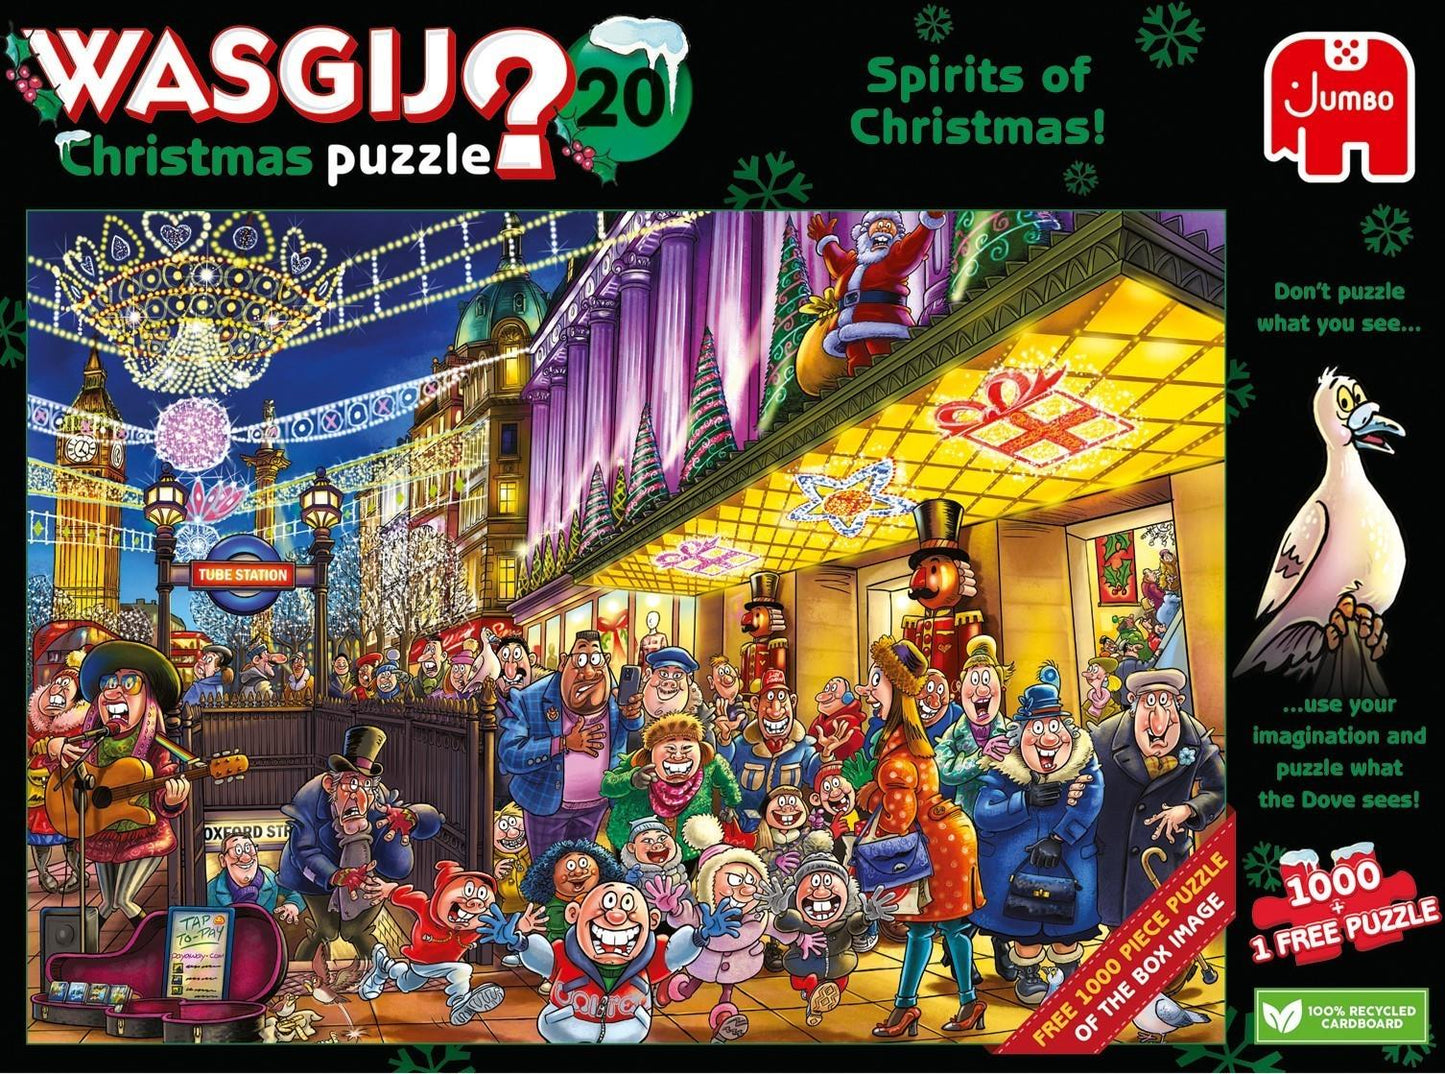 Wasgij Christmas 20 Spirit of Christmas 1000 Piece Jigsaw Puzzle